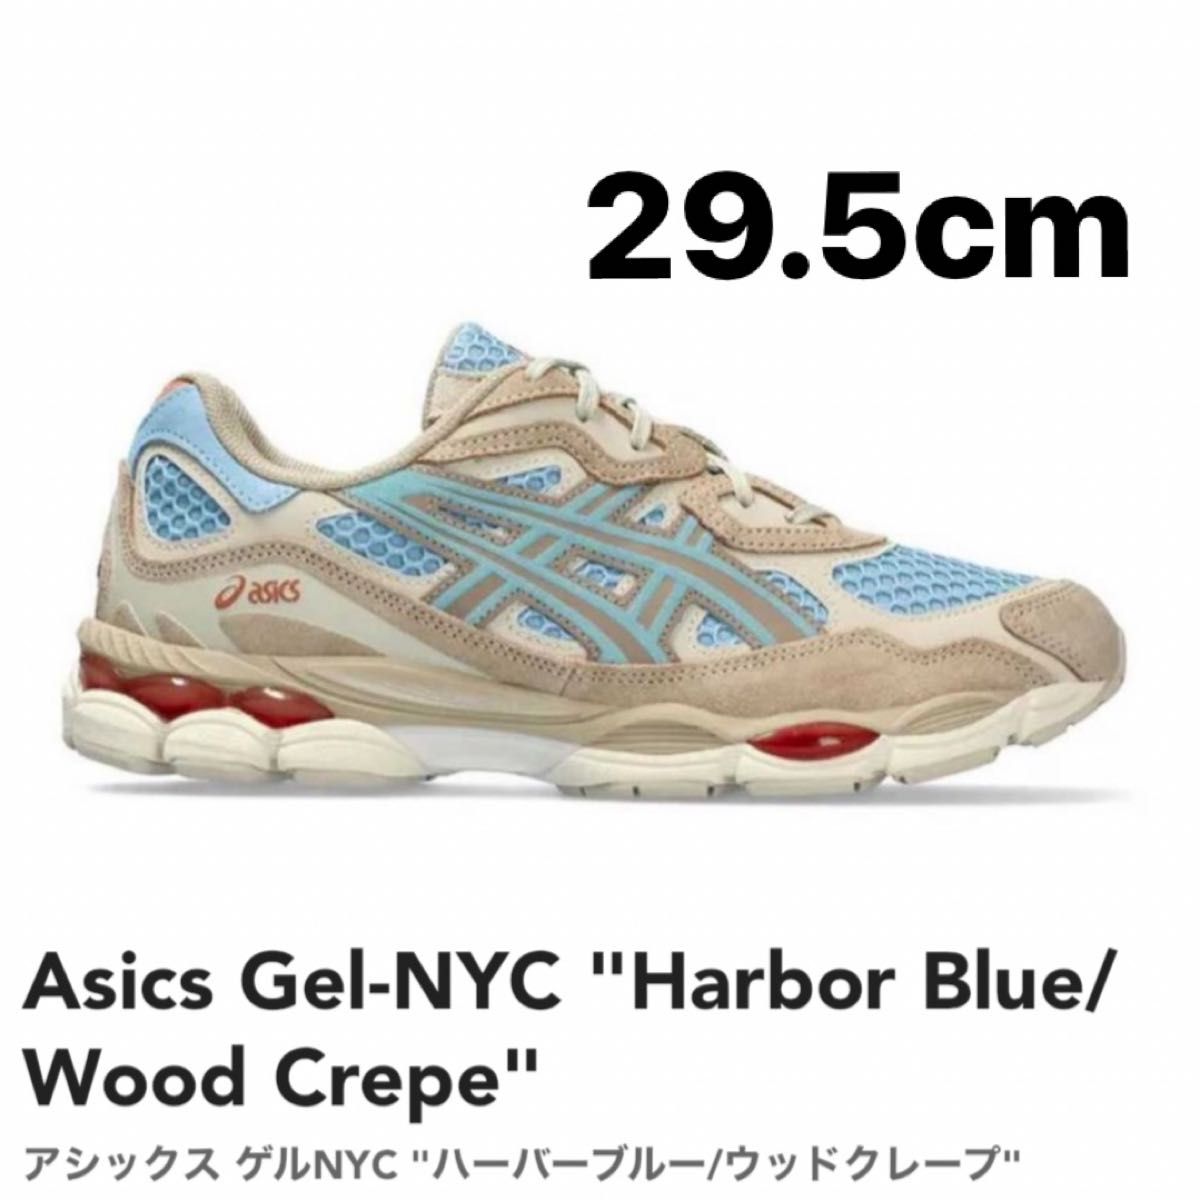 Asics Gel-NYC "Harbor Blue/Wood Crepe"